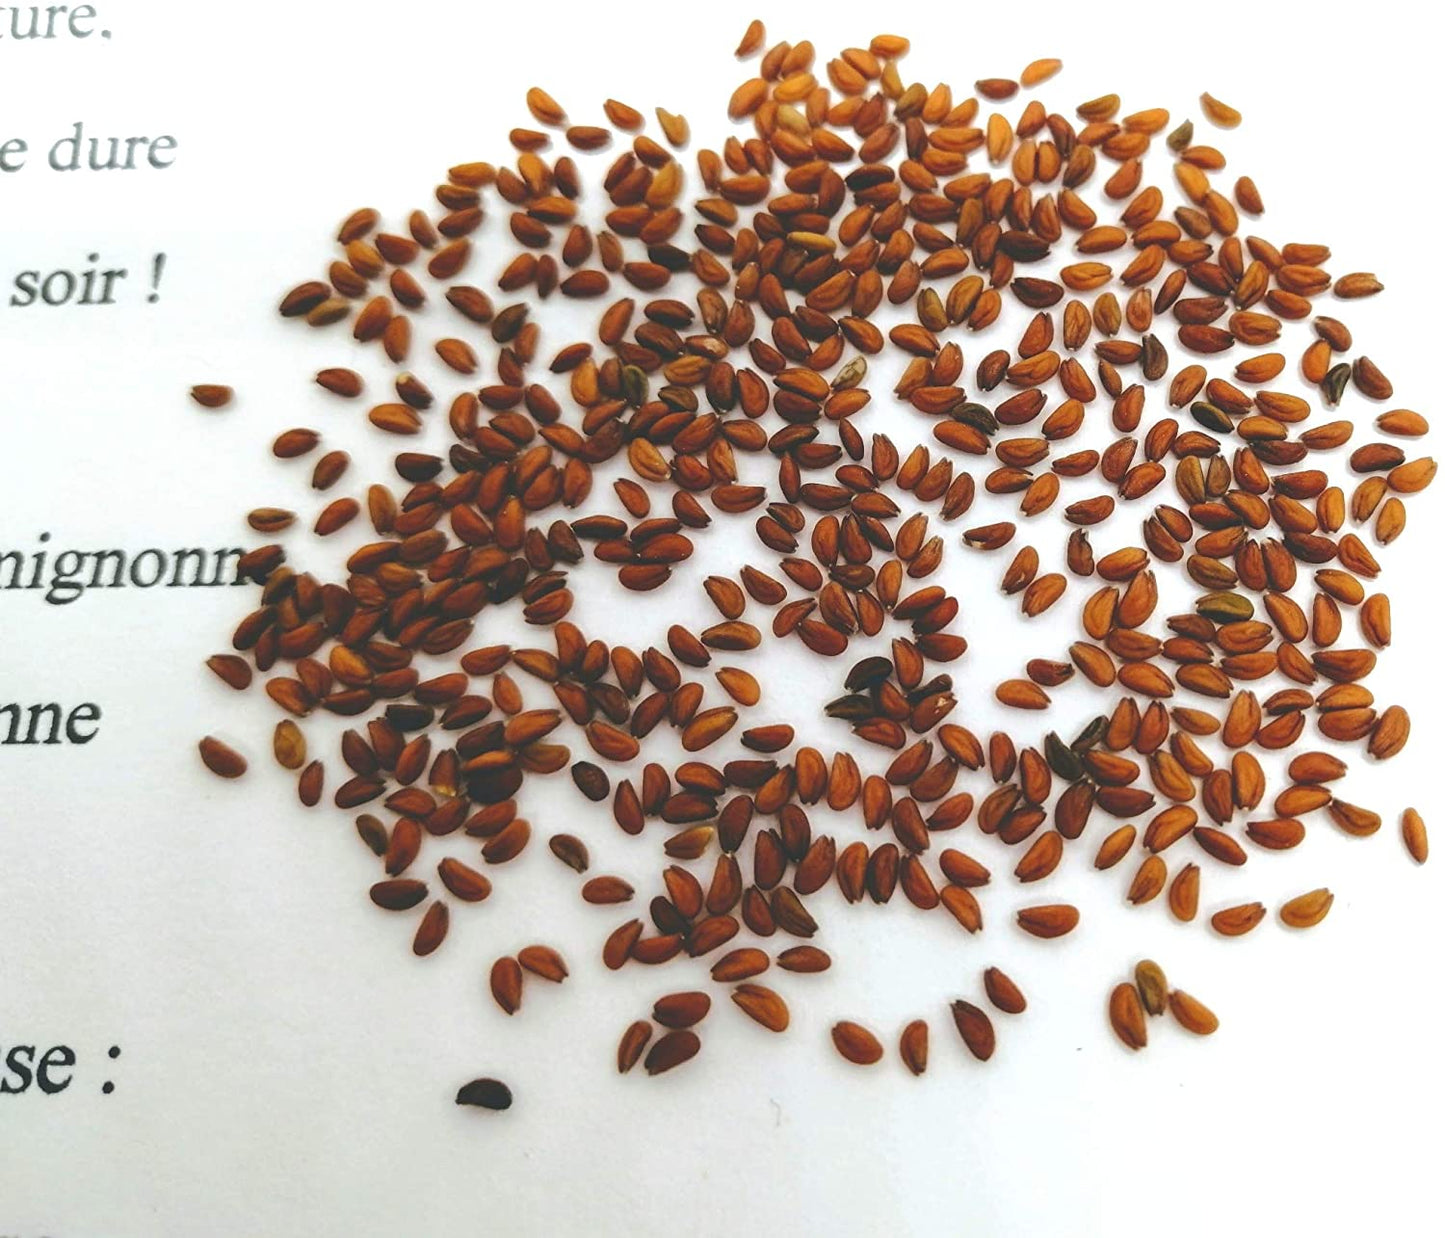 Hundredfold Garden Cress 1000 Herb Seeds - Lepidium sativum Non-GMO Curly Cress, Spicy Microgreen, or Cress Shoot